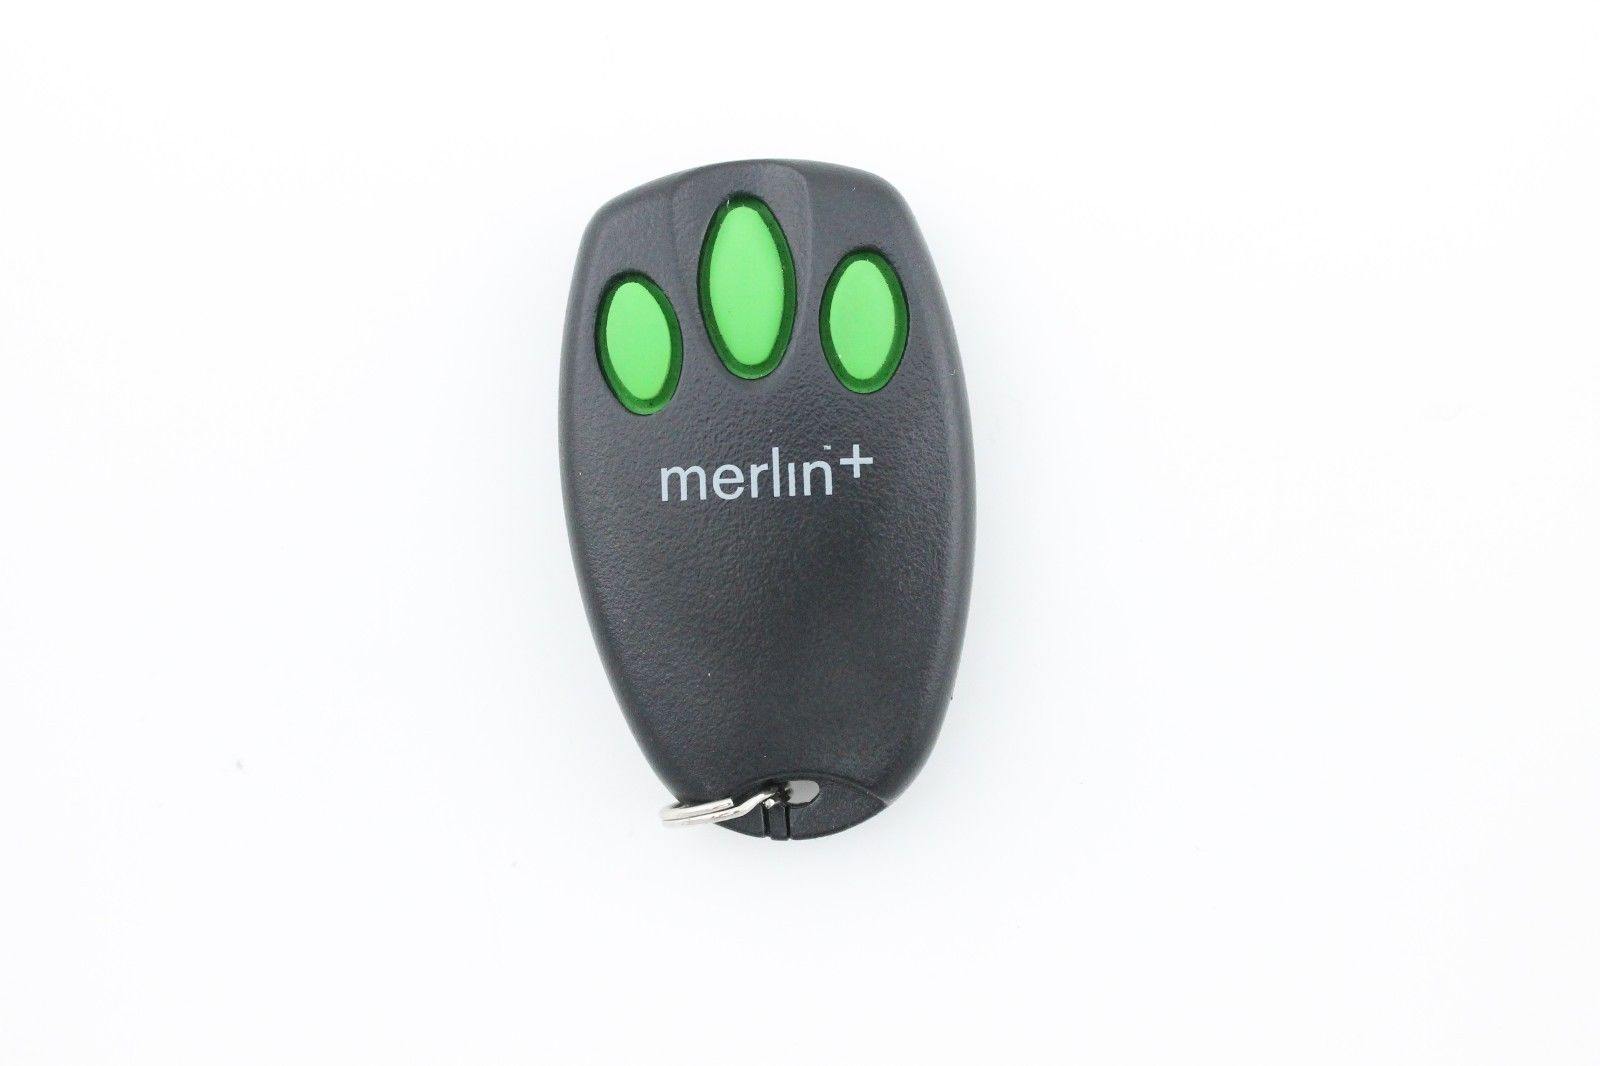 Merlin+ 2.0 E945 Remote - China Air Conditioner Remotes :: Cheapest AC Remote Solutions